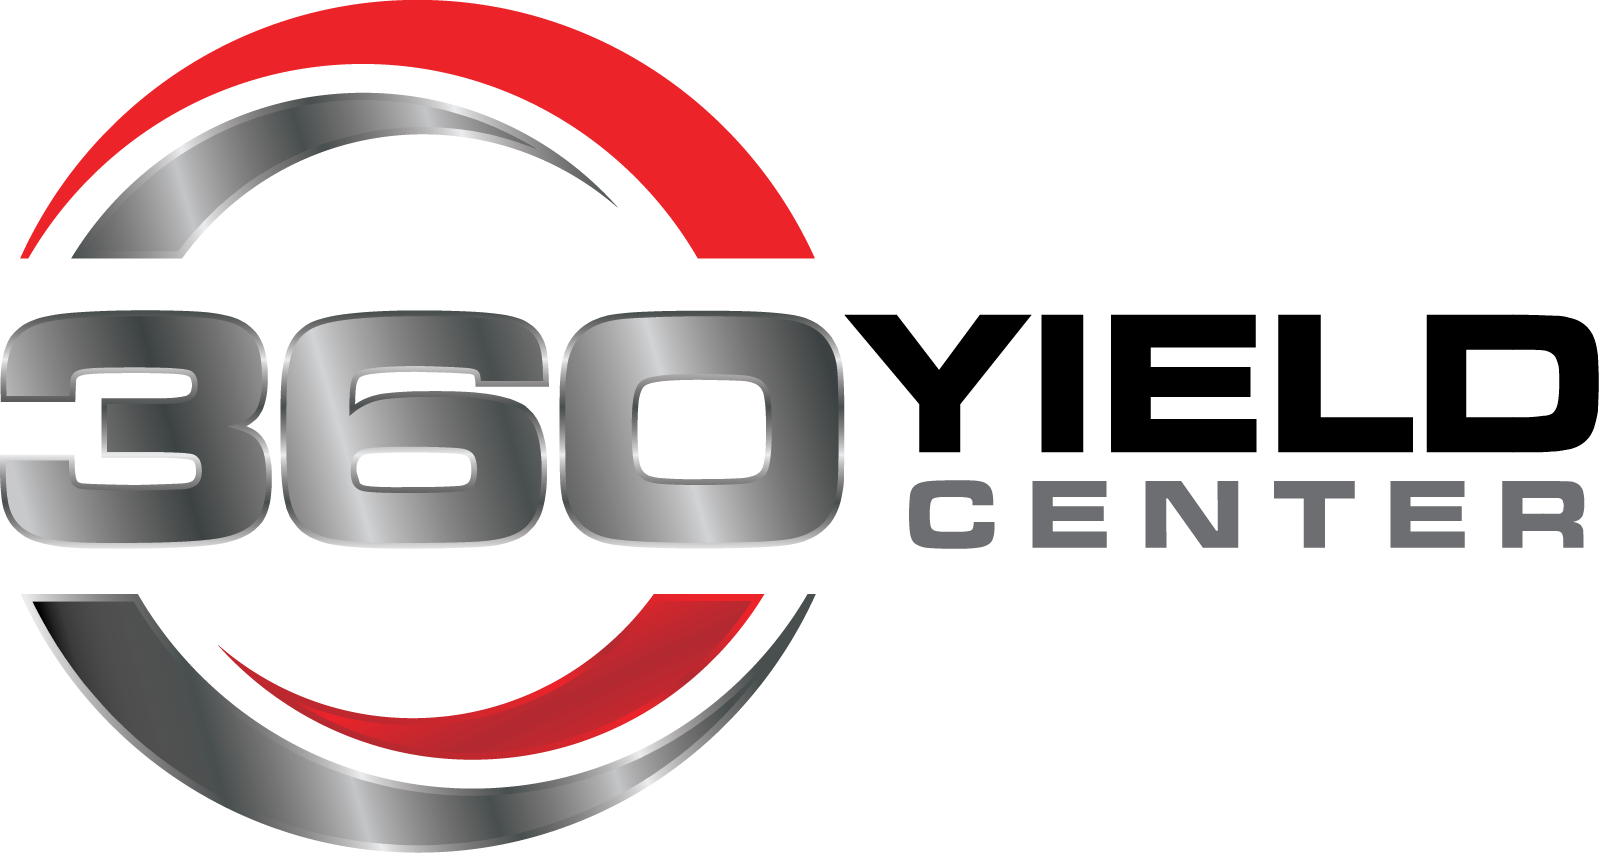 360 Yield Center Logo